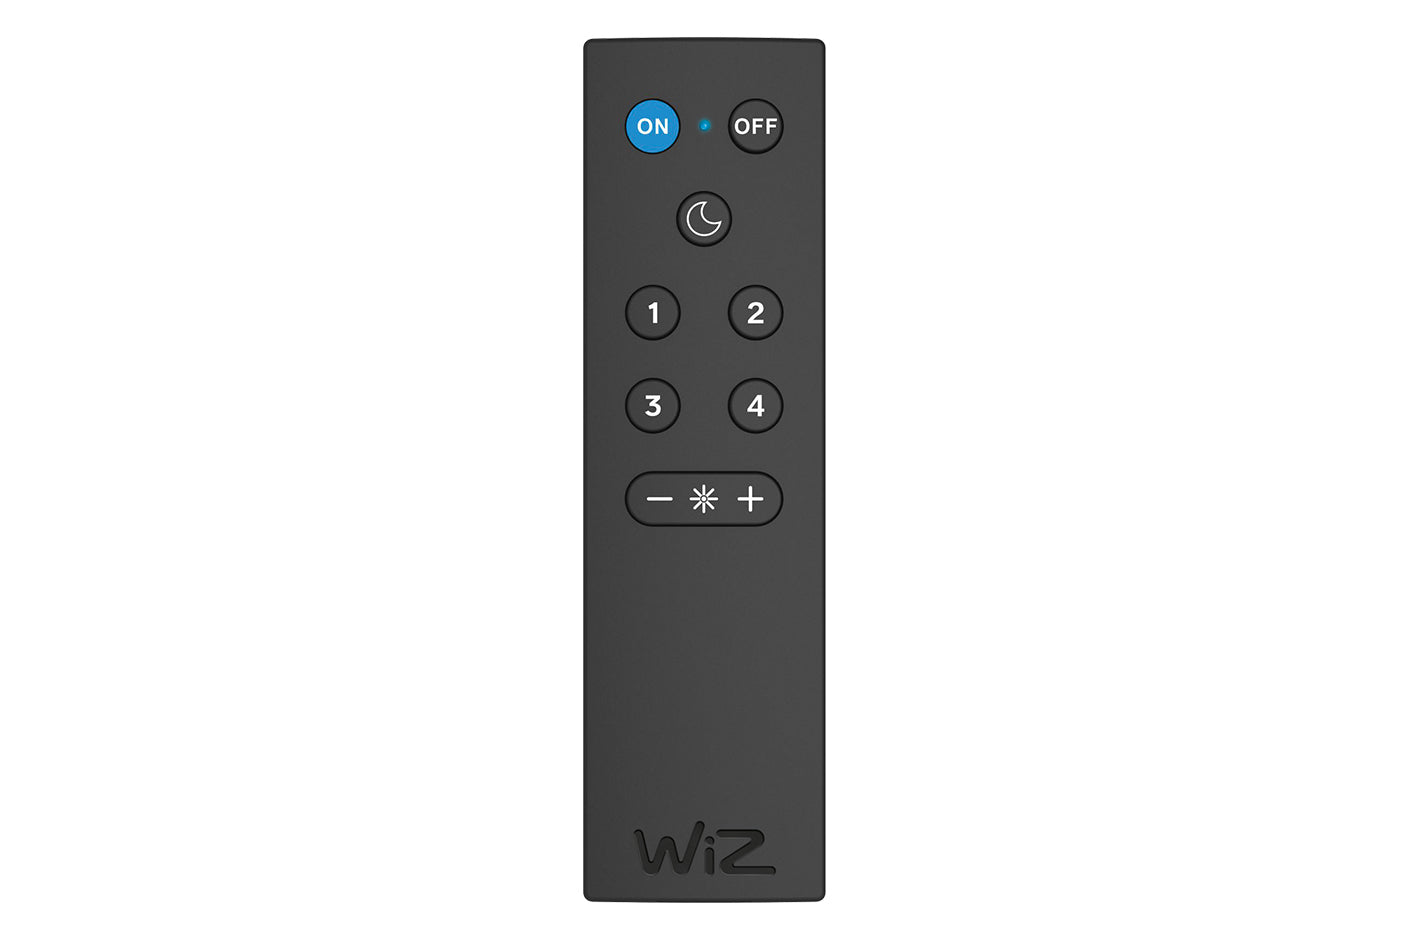 4lite WiZ Connected Smart Lighting Starter Kit including 6x GU10 Bulbs, 1x Remote Control & 2x 3-Pin UK Plugs - maplin.co.uk